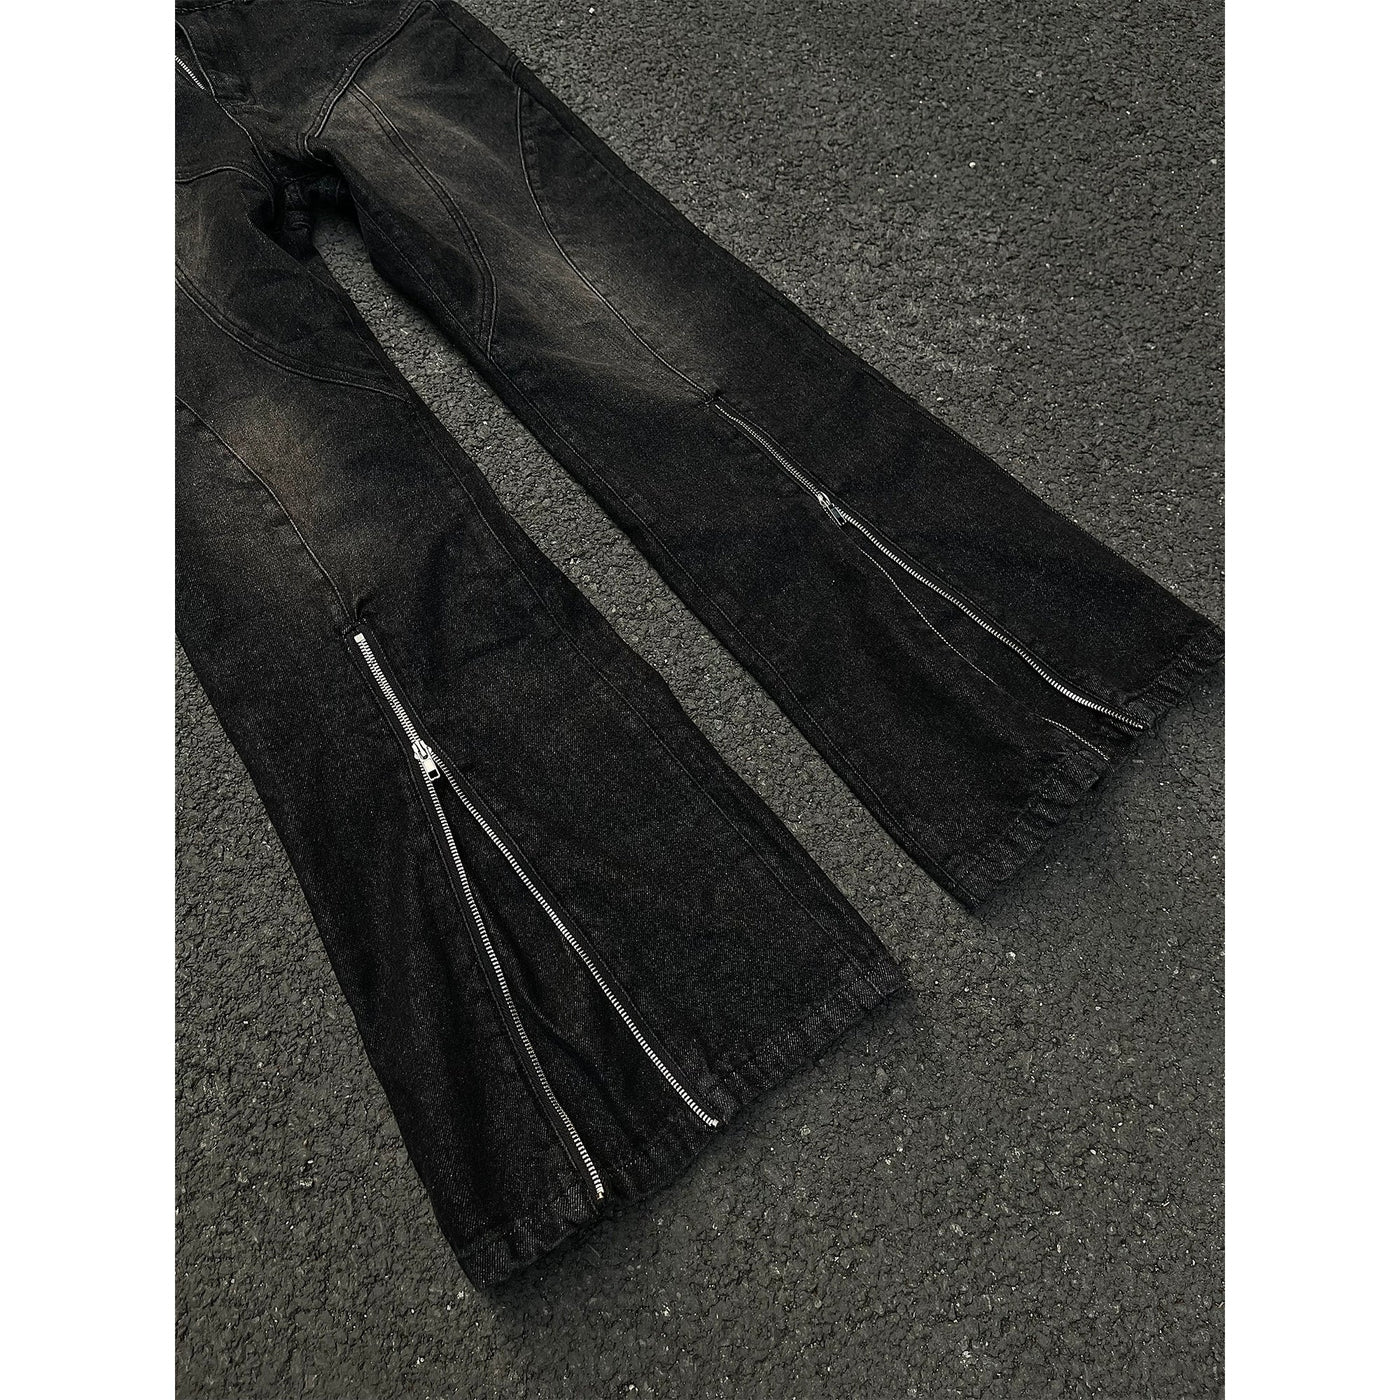 Zipped Hem Washed Jeans Korean Street Fashion Jeans By MaxDstr Shop Online at OH Vault